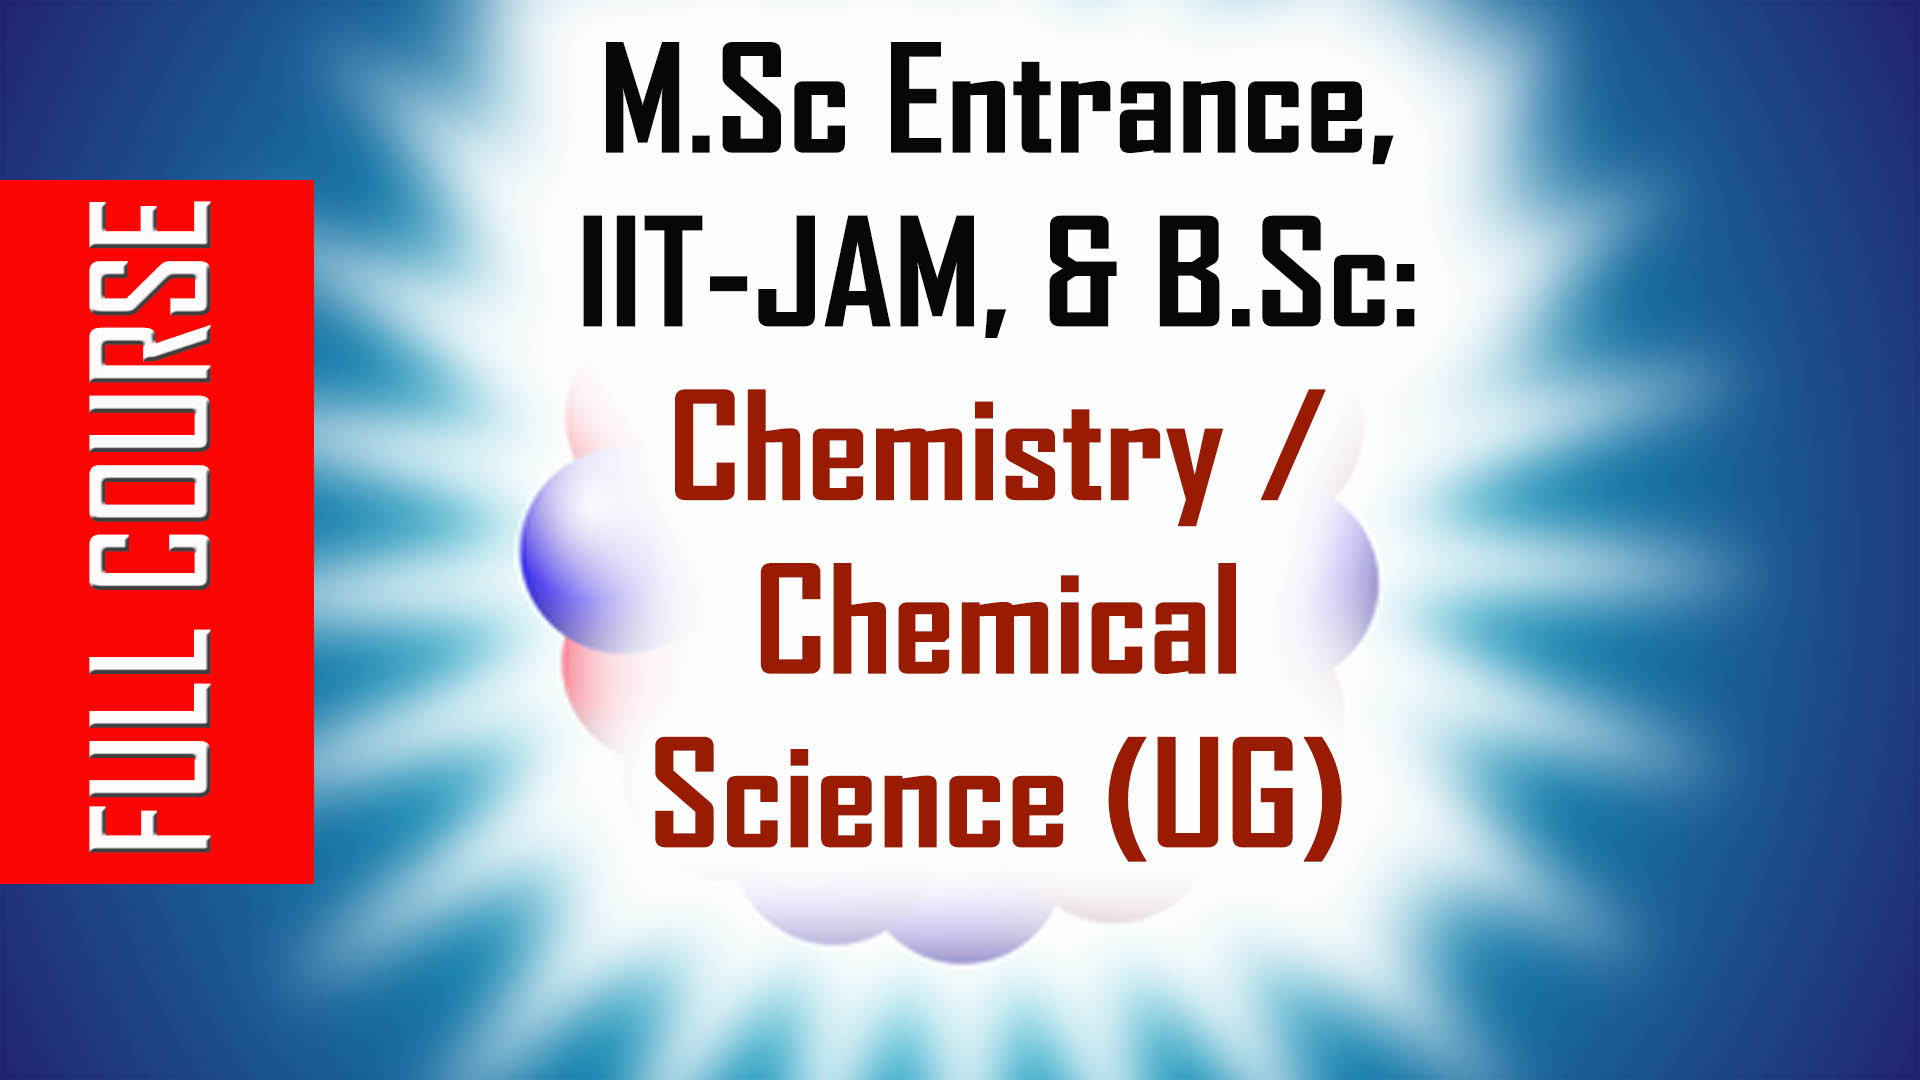 M.Sc Entrance, IIT-JAM & B.Sc: Chemistry / Chemical Science (UG)